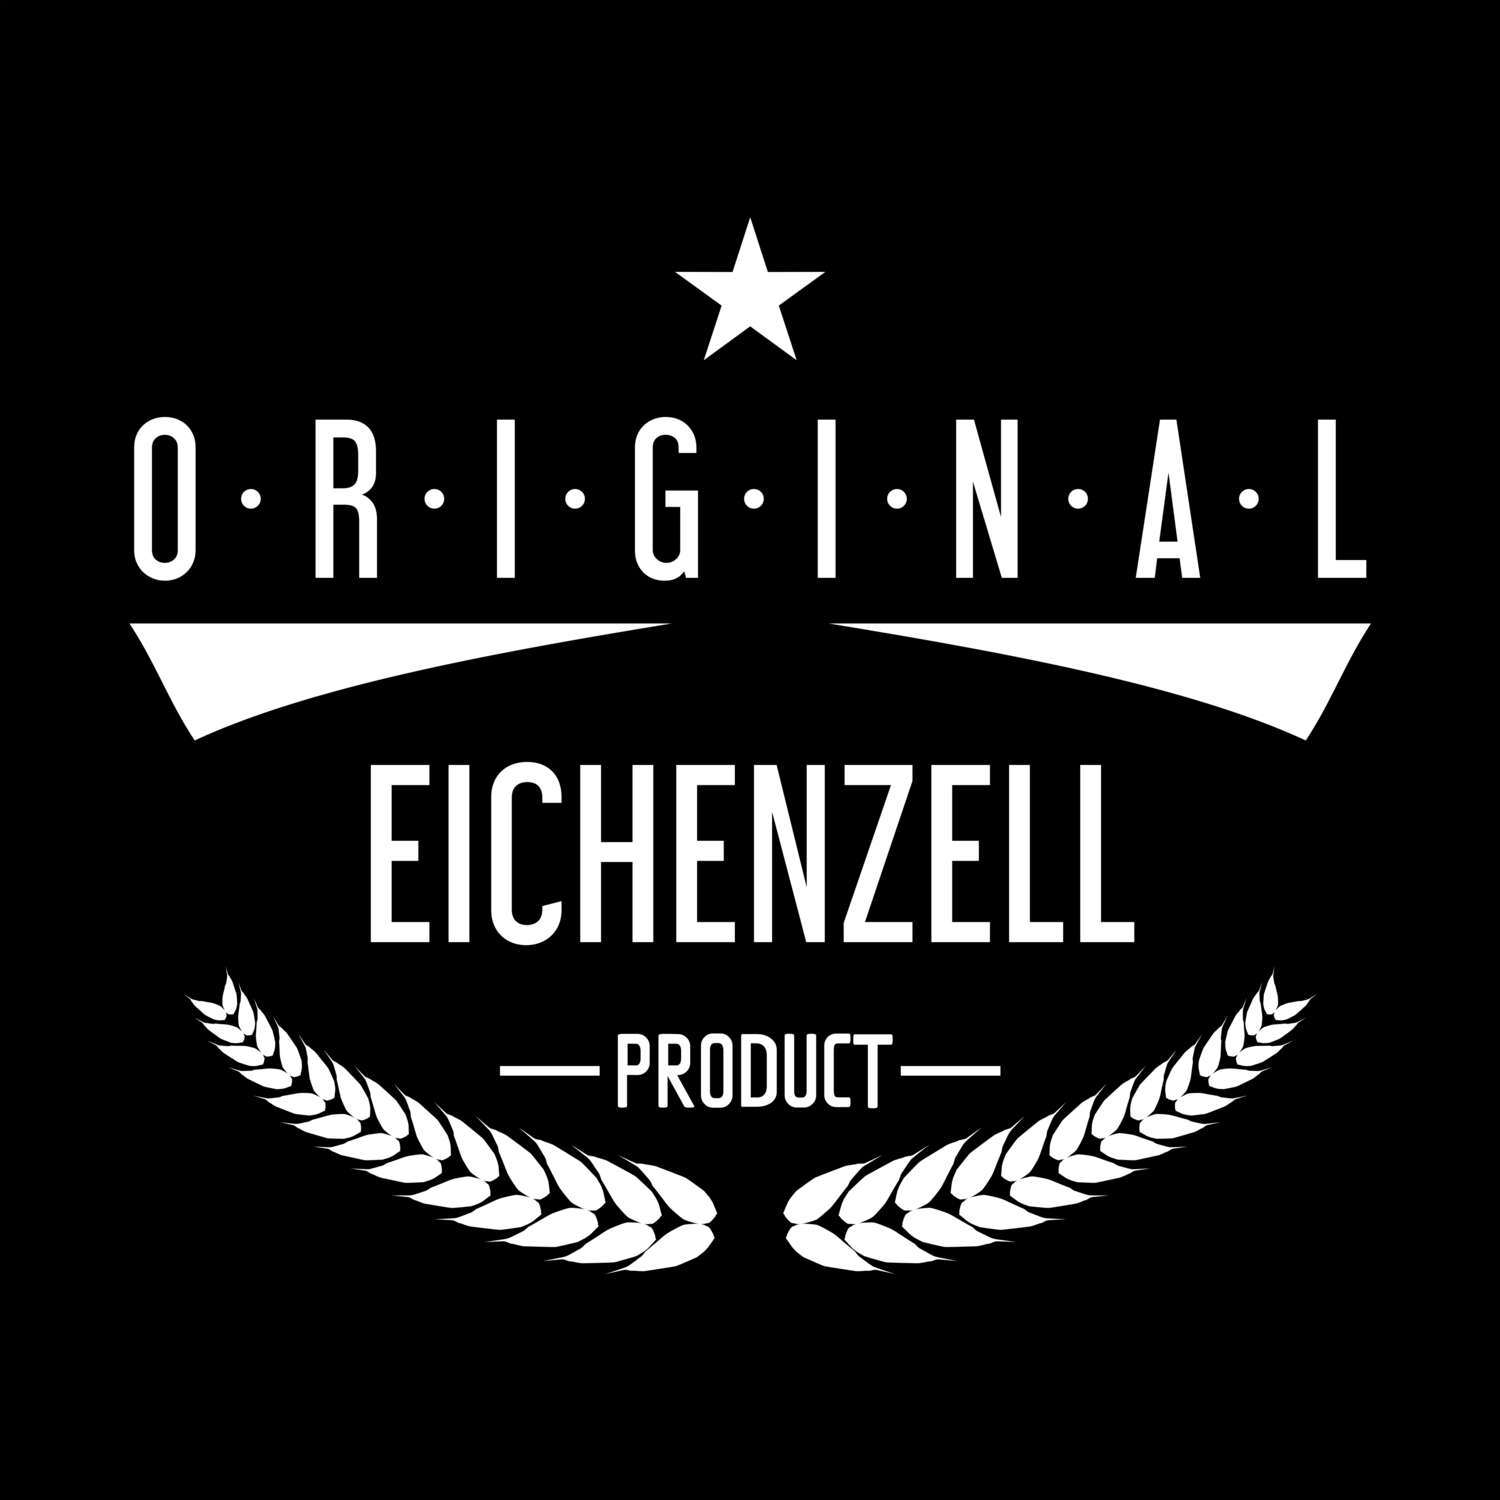 Eichenzell T-Shirt »Original Product«